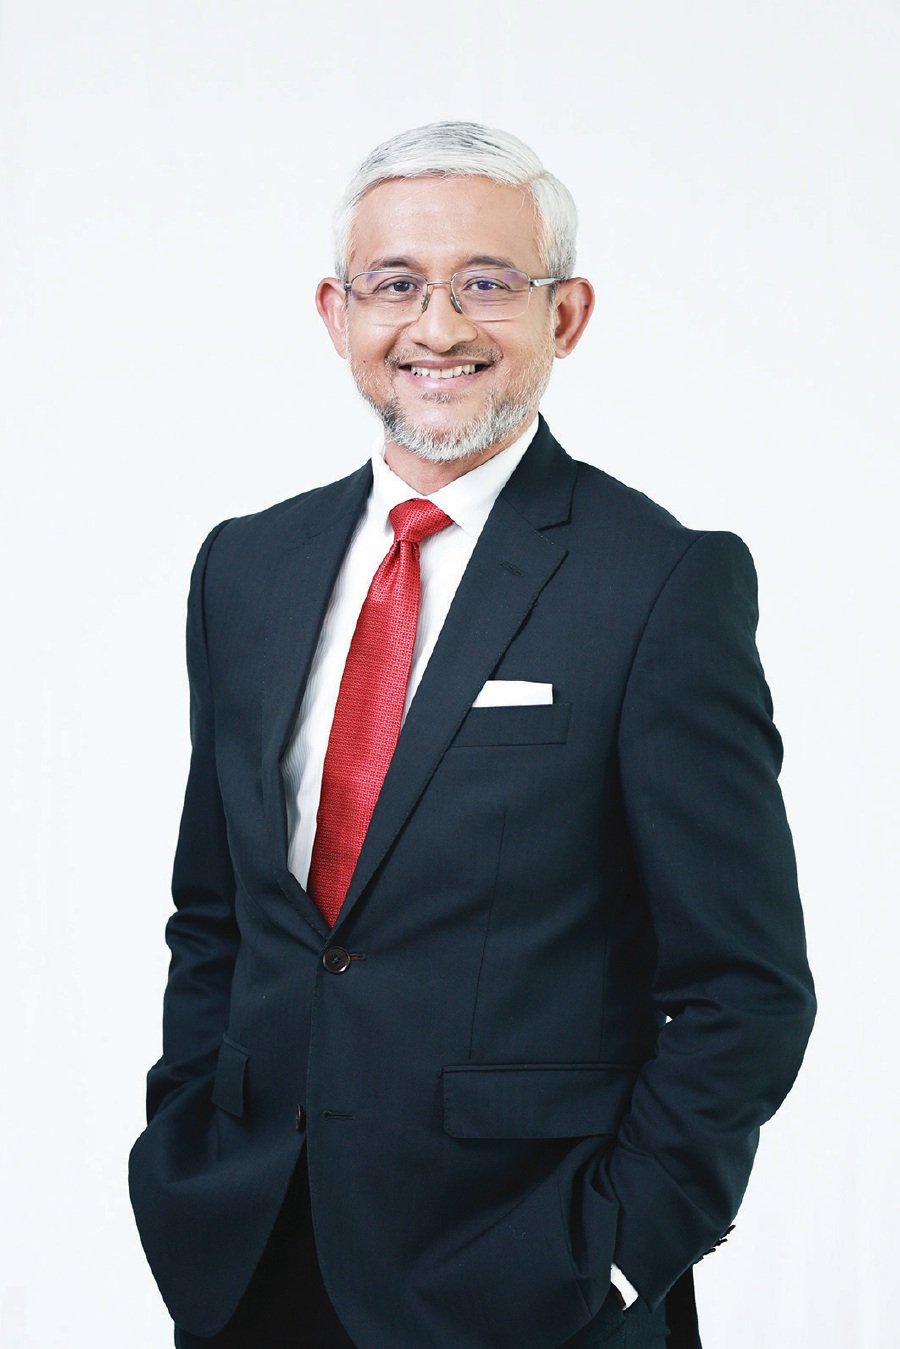 InvestKL chief executive officer Datuk Muhammad Azmi Zulkifli 